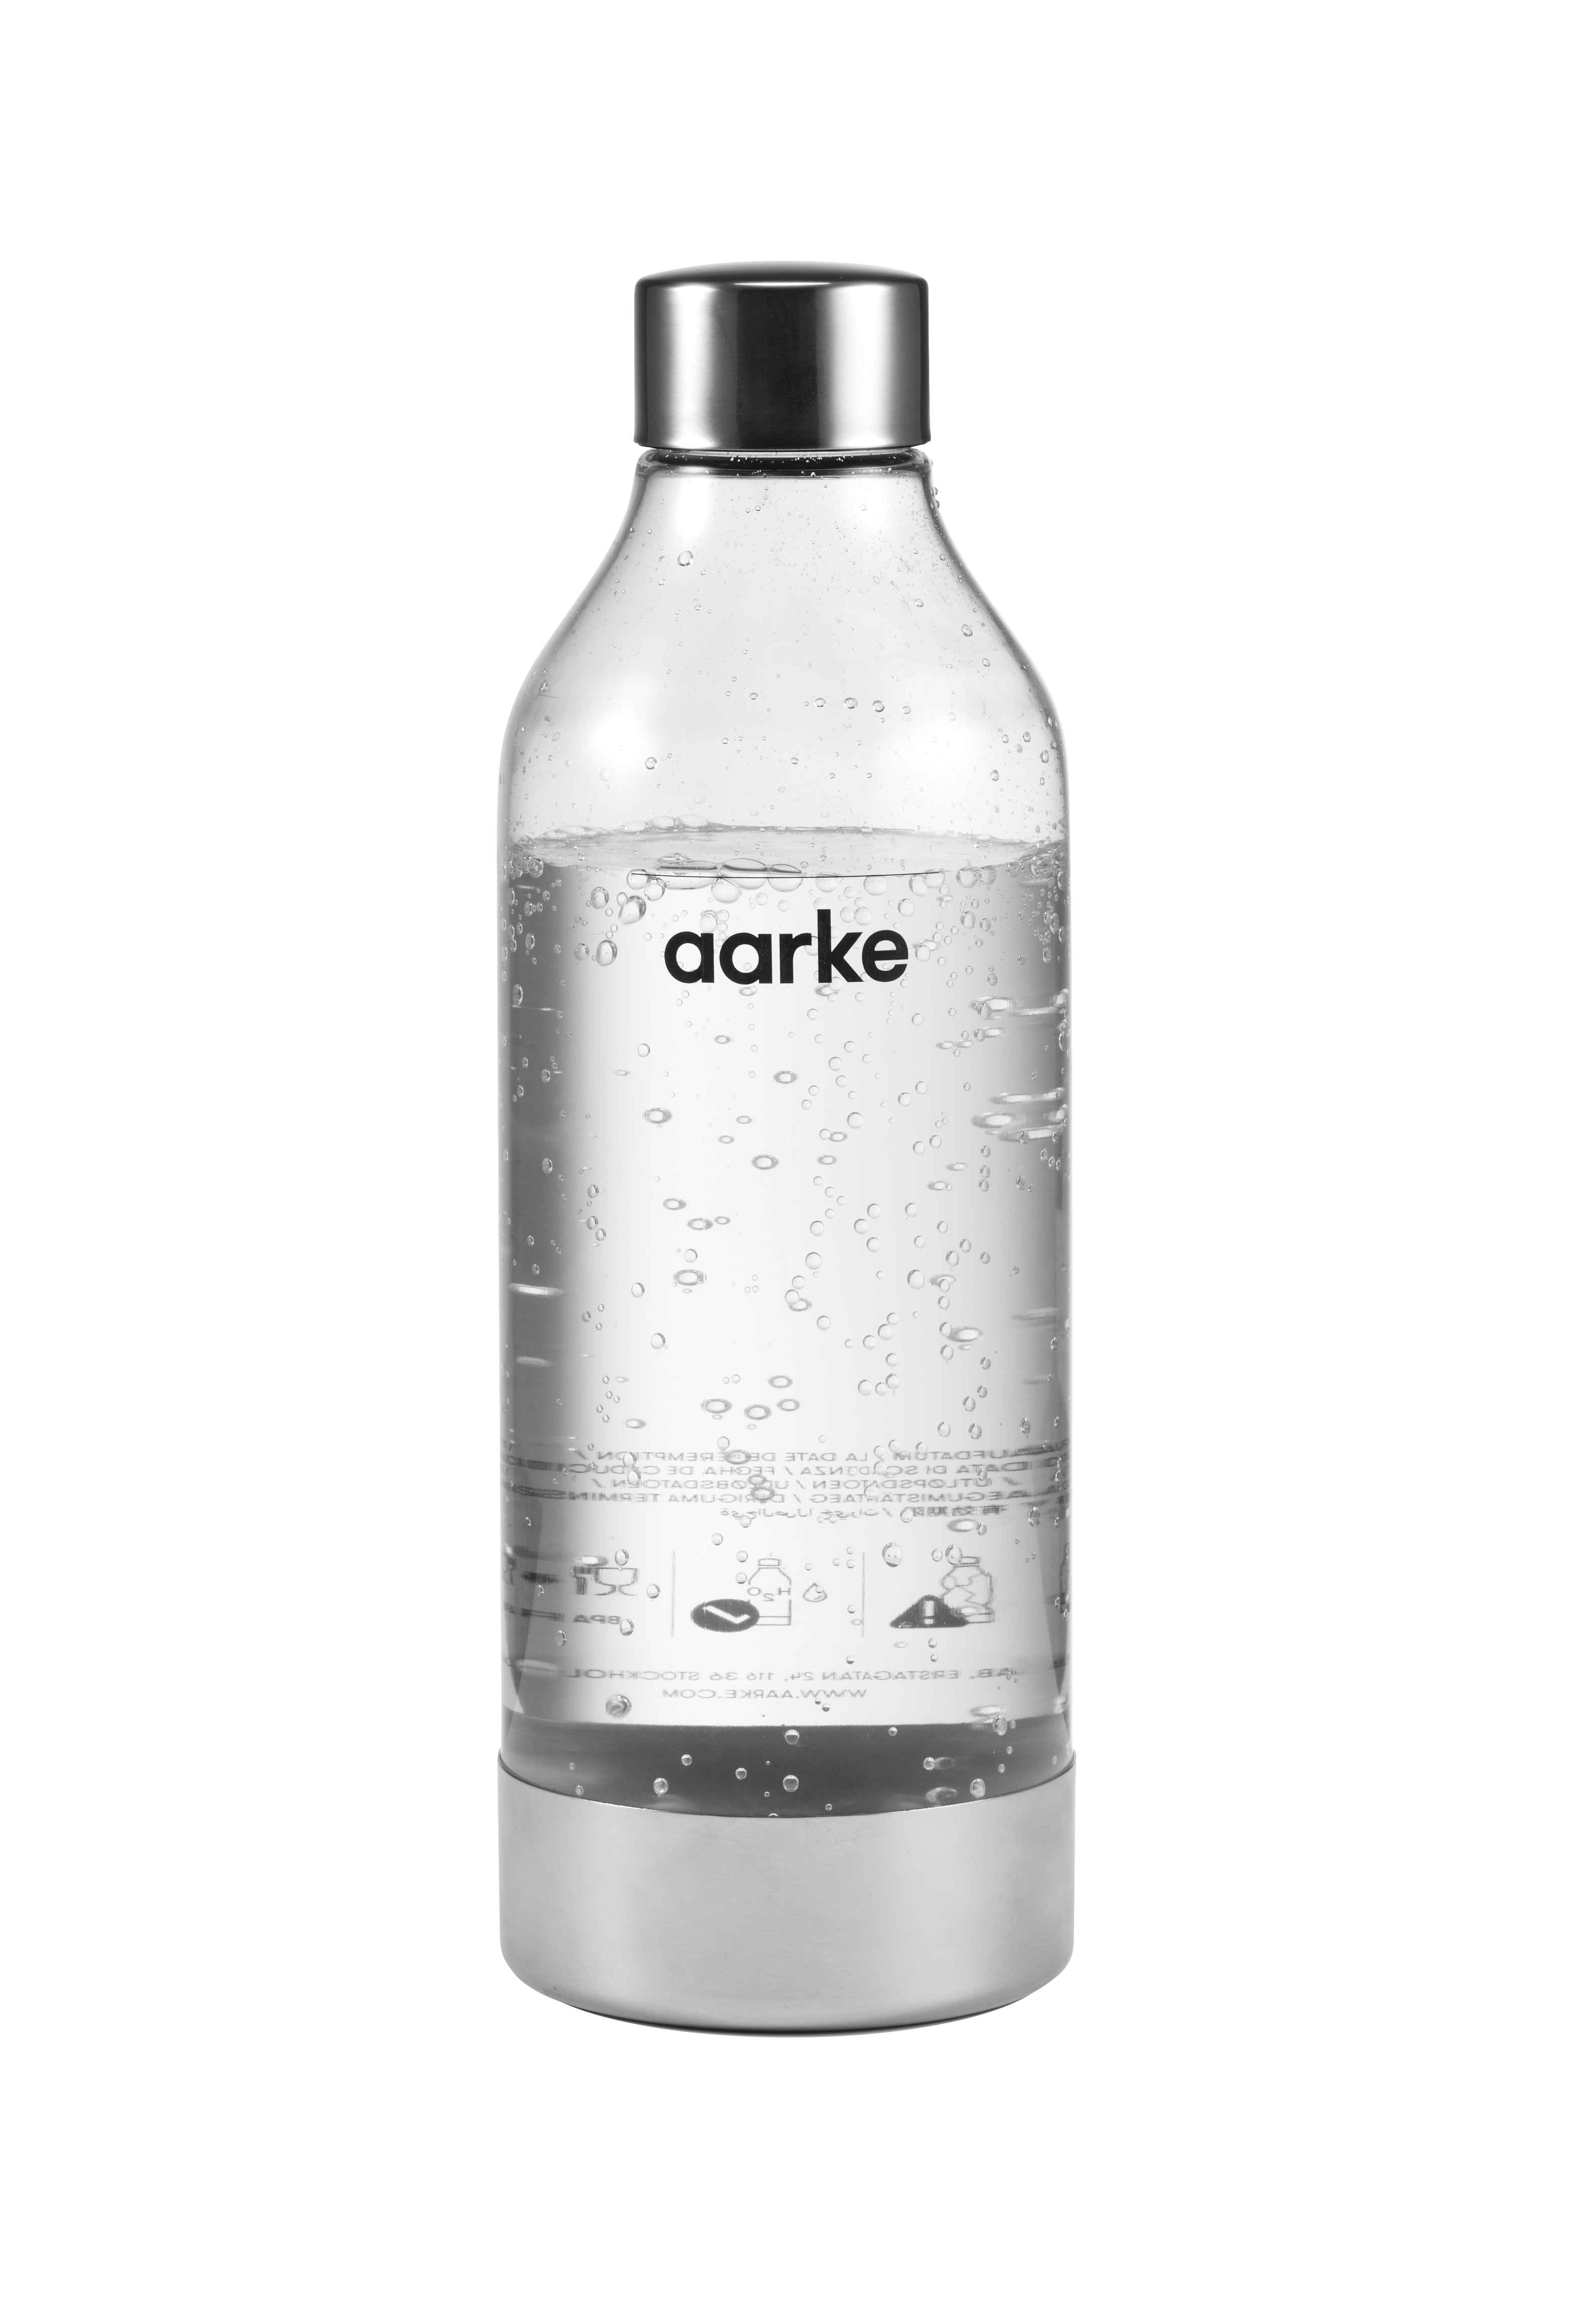 Aarke Water Bottle for Carbonator